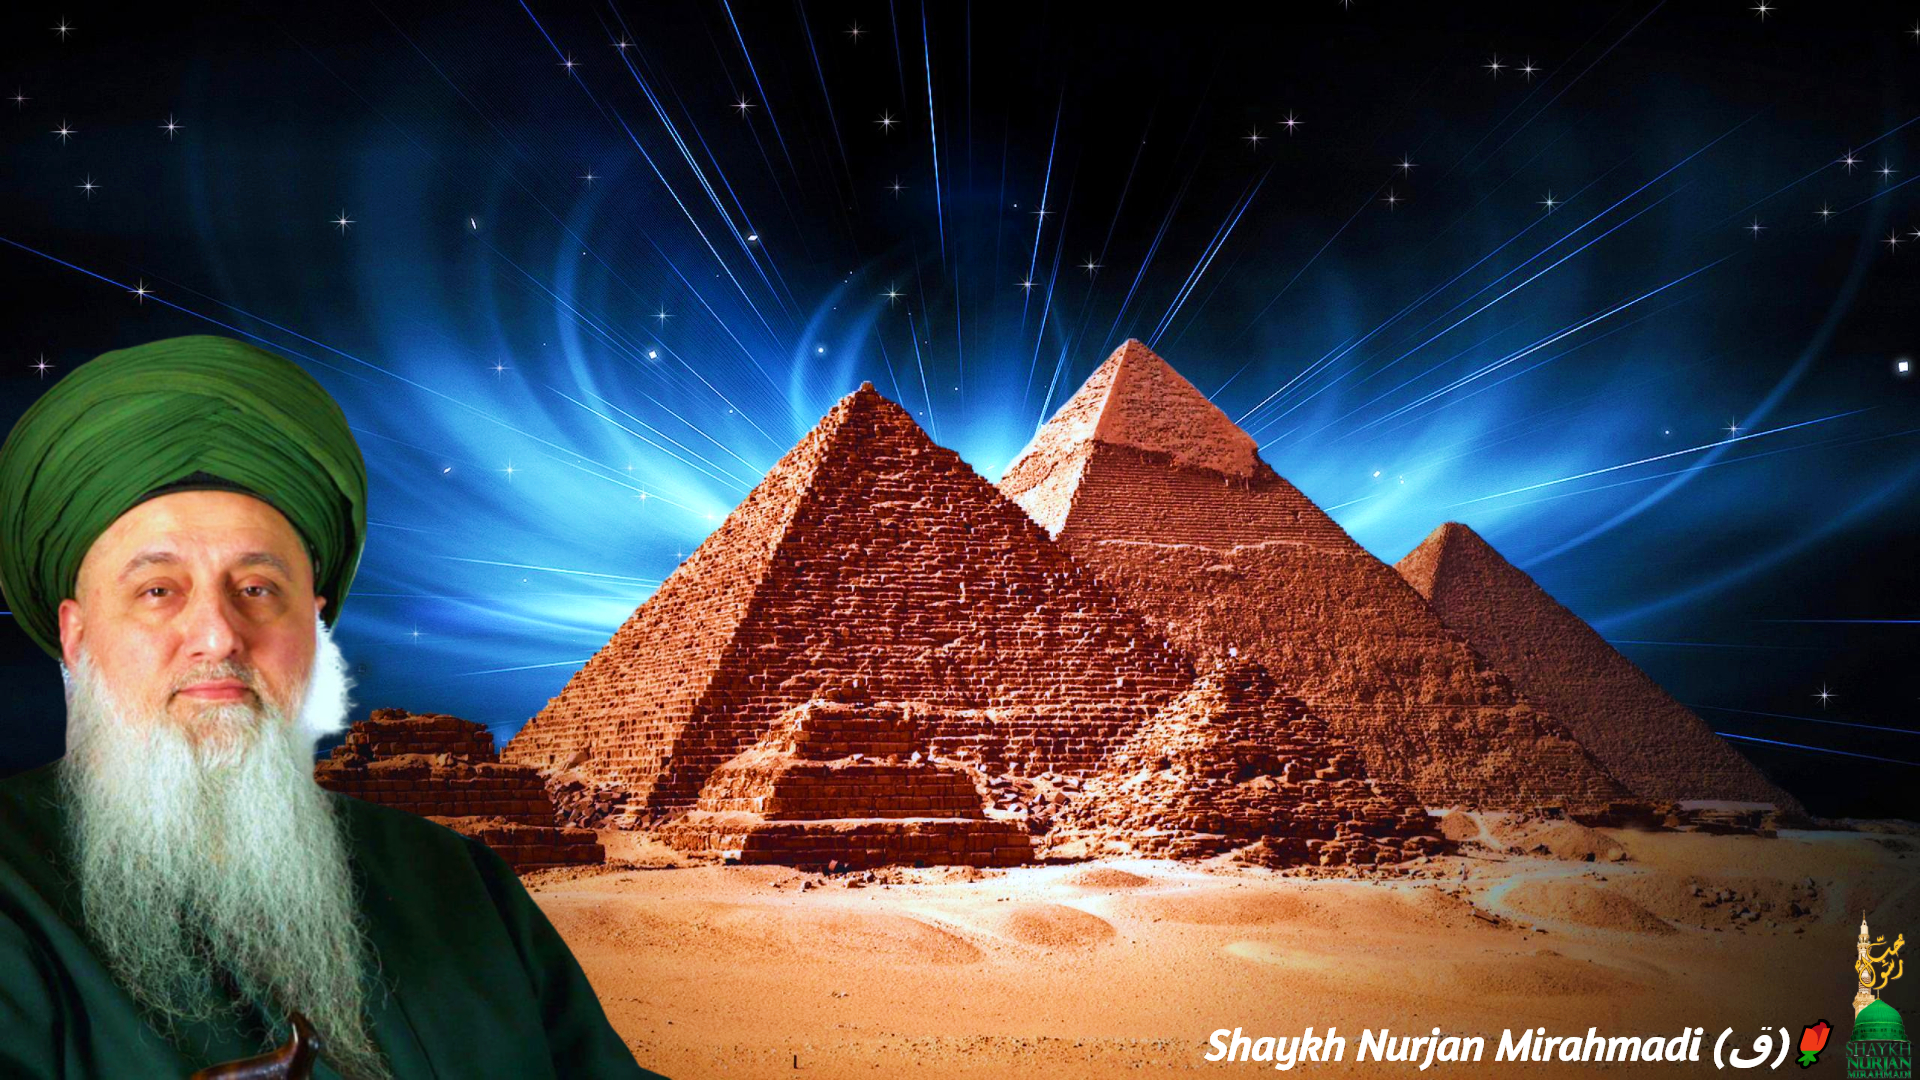 Shaykh Nurjan Mirahmadi-pyramids in background-insulation of energy-pyramids-Sunnah-logo